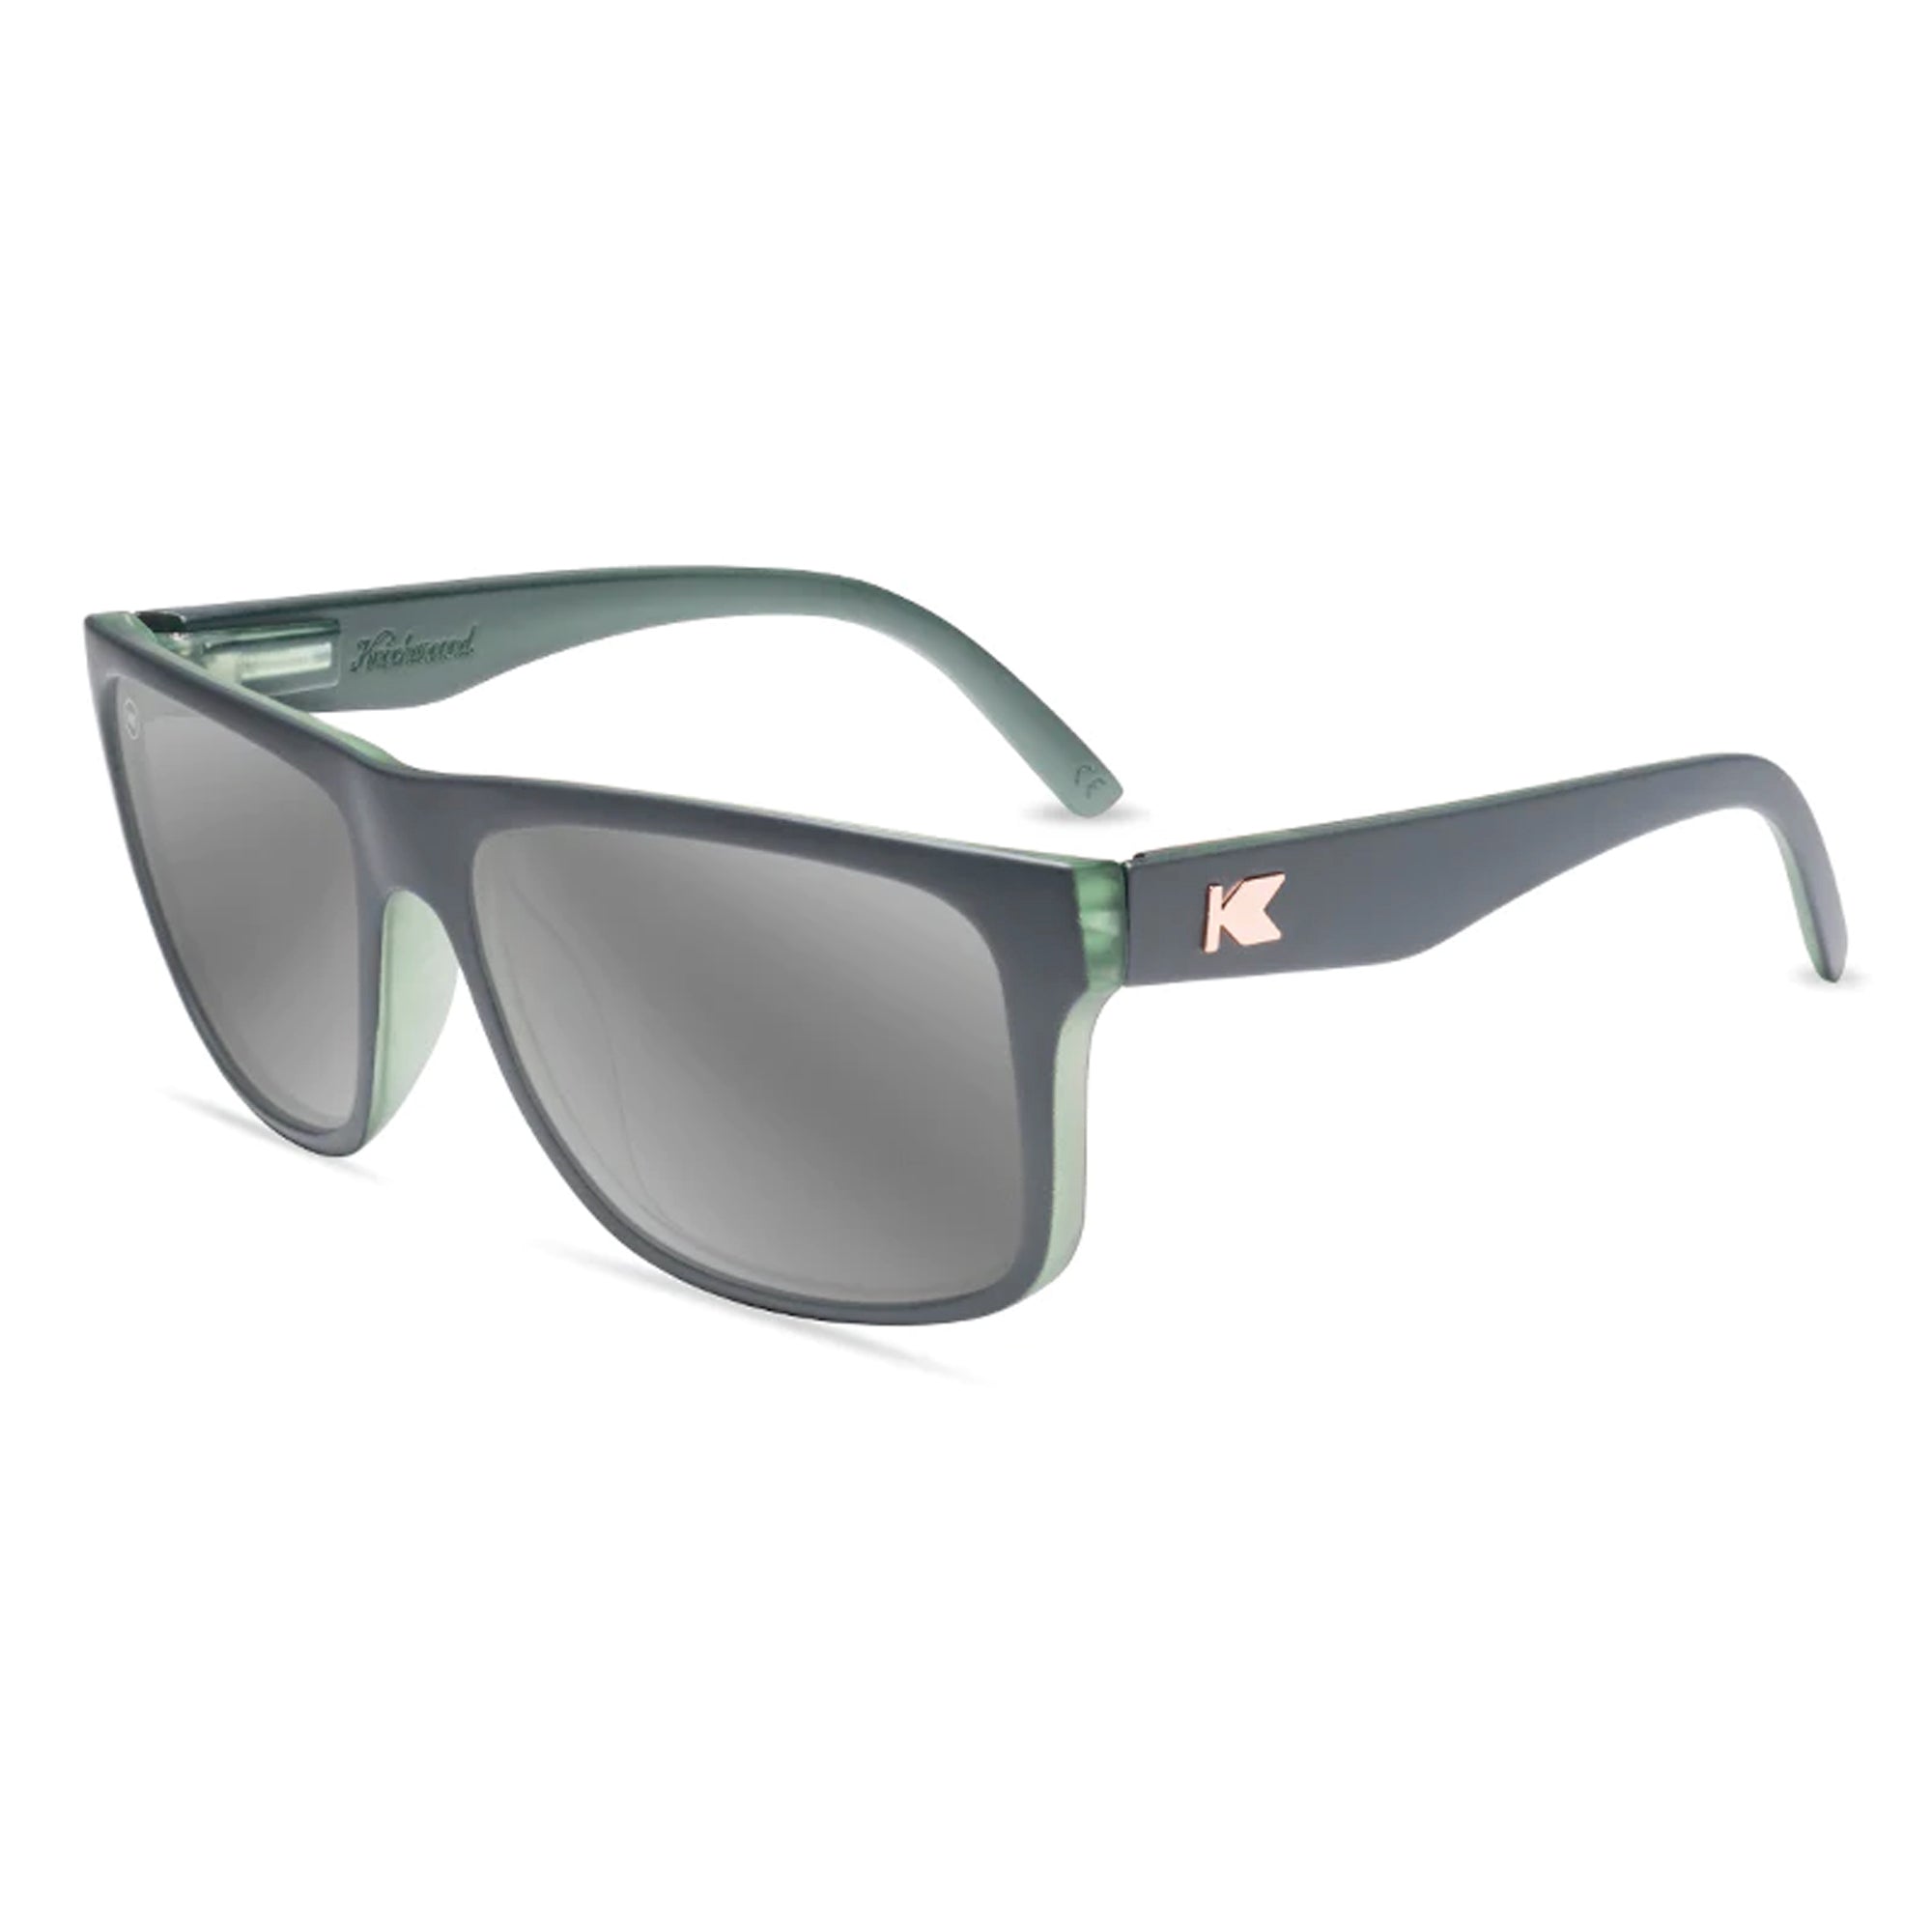 Knockaround Torrey Pines Men's Polarized Sunglasses